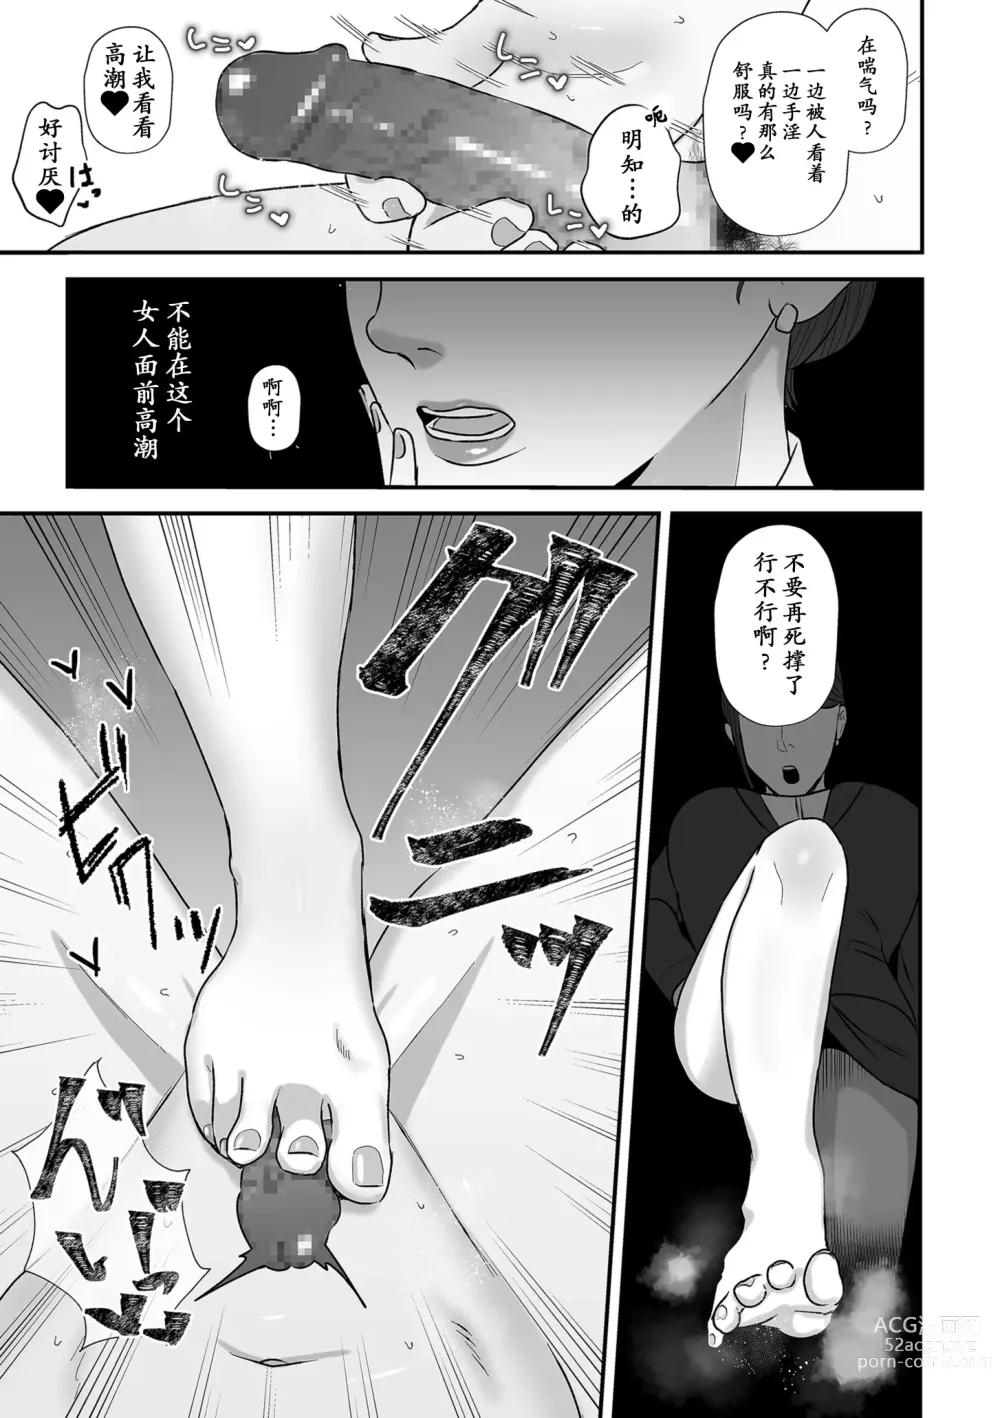 Page 14 of manga 啊啊，可爱的无能受虐狂